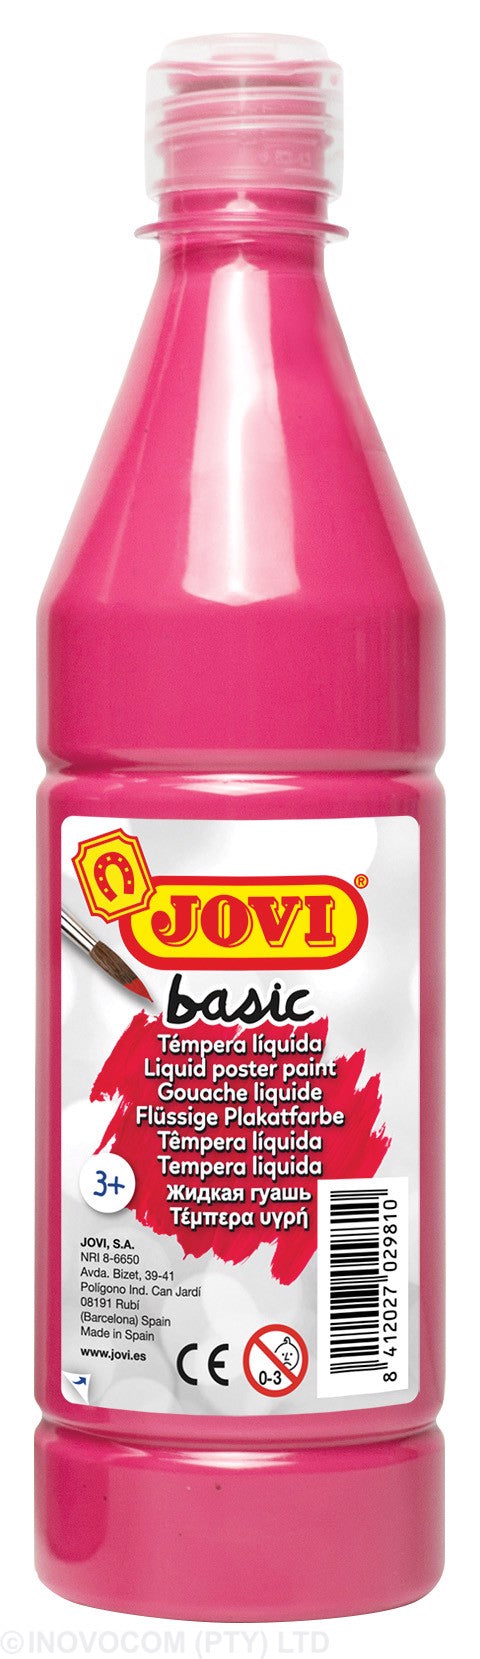 Jovi Basic Liquid Poster Paint Bottle 500ml Magenta